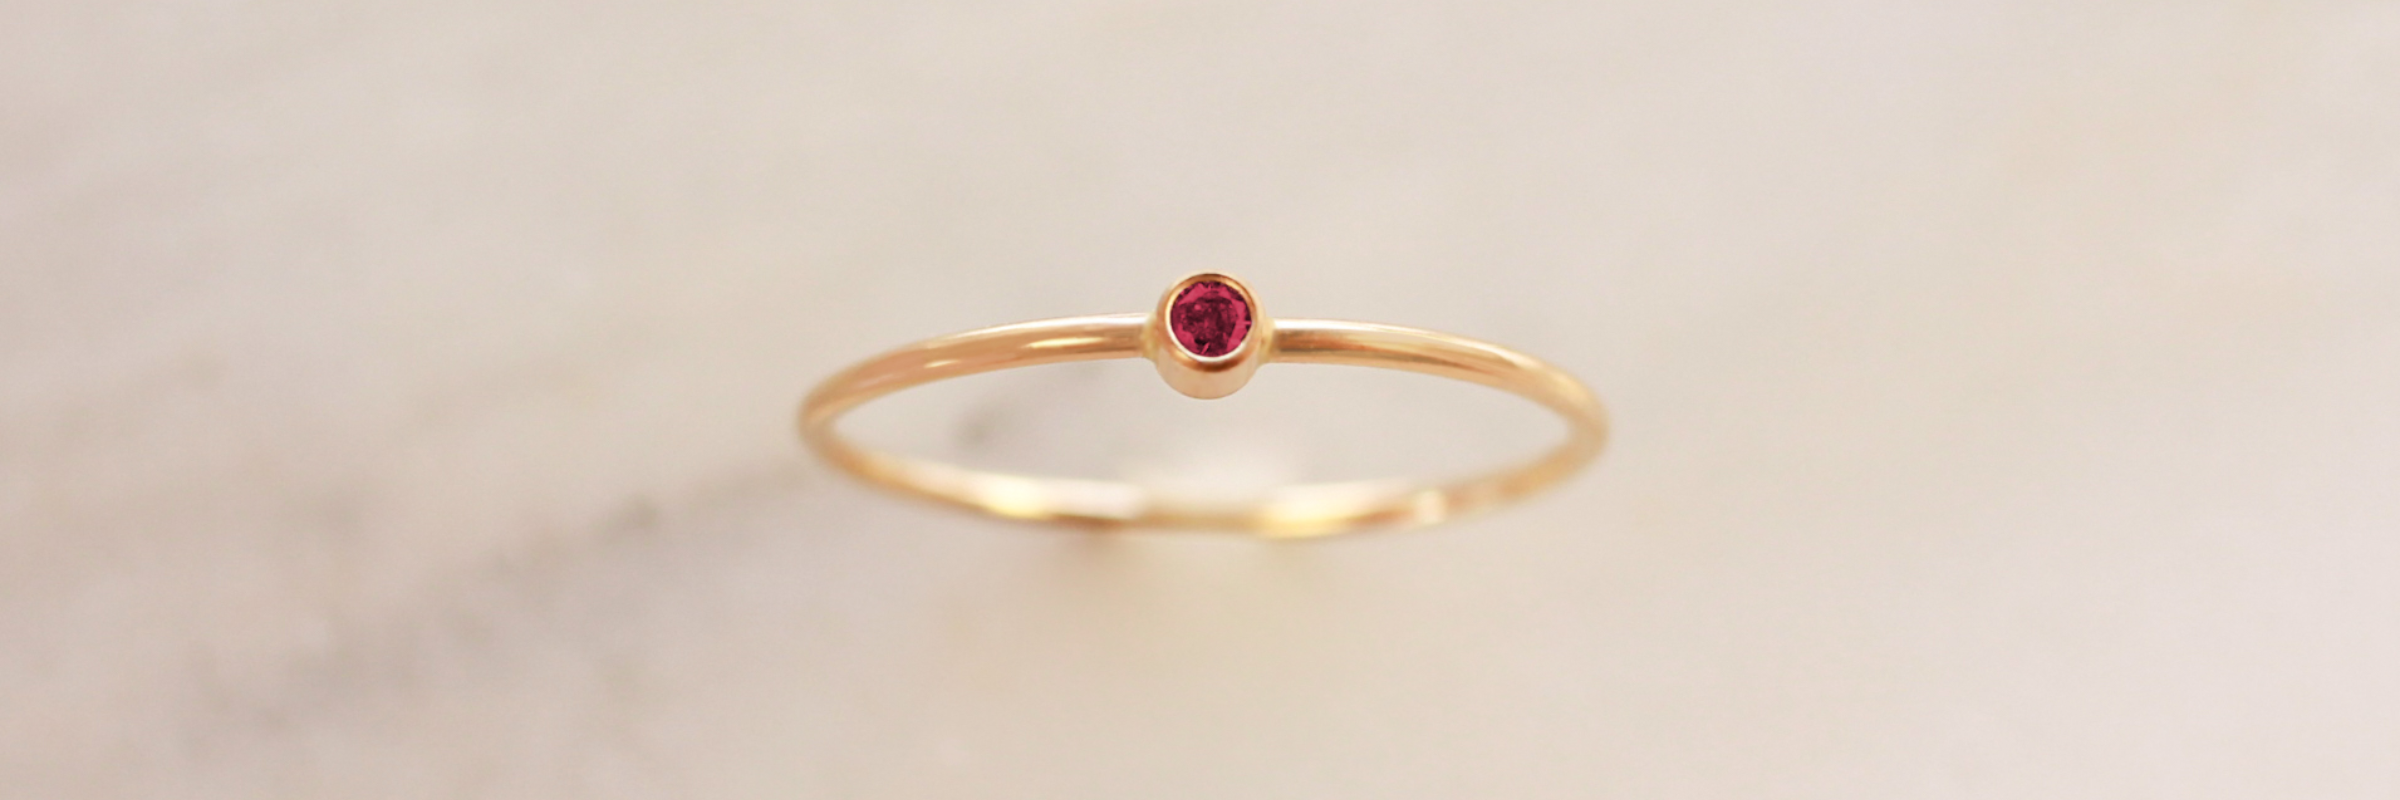 NOLIA Jewelry • Tiny July Birthstone Ring • Ruby